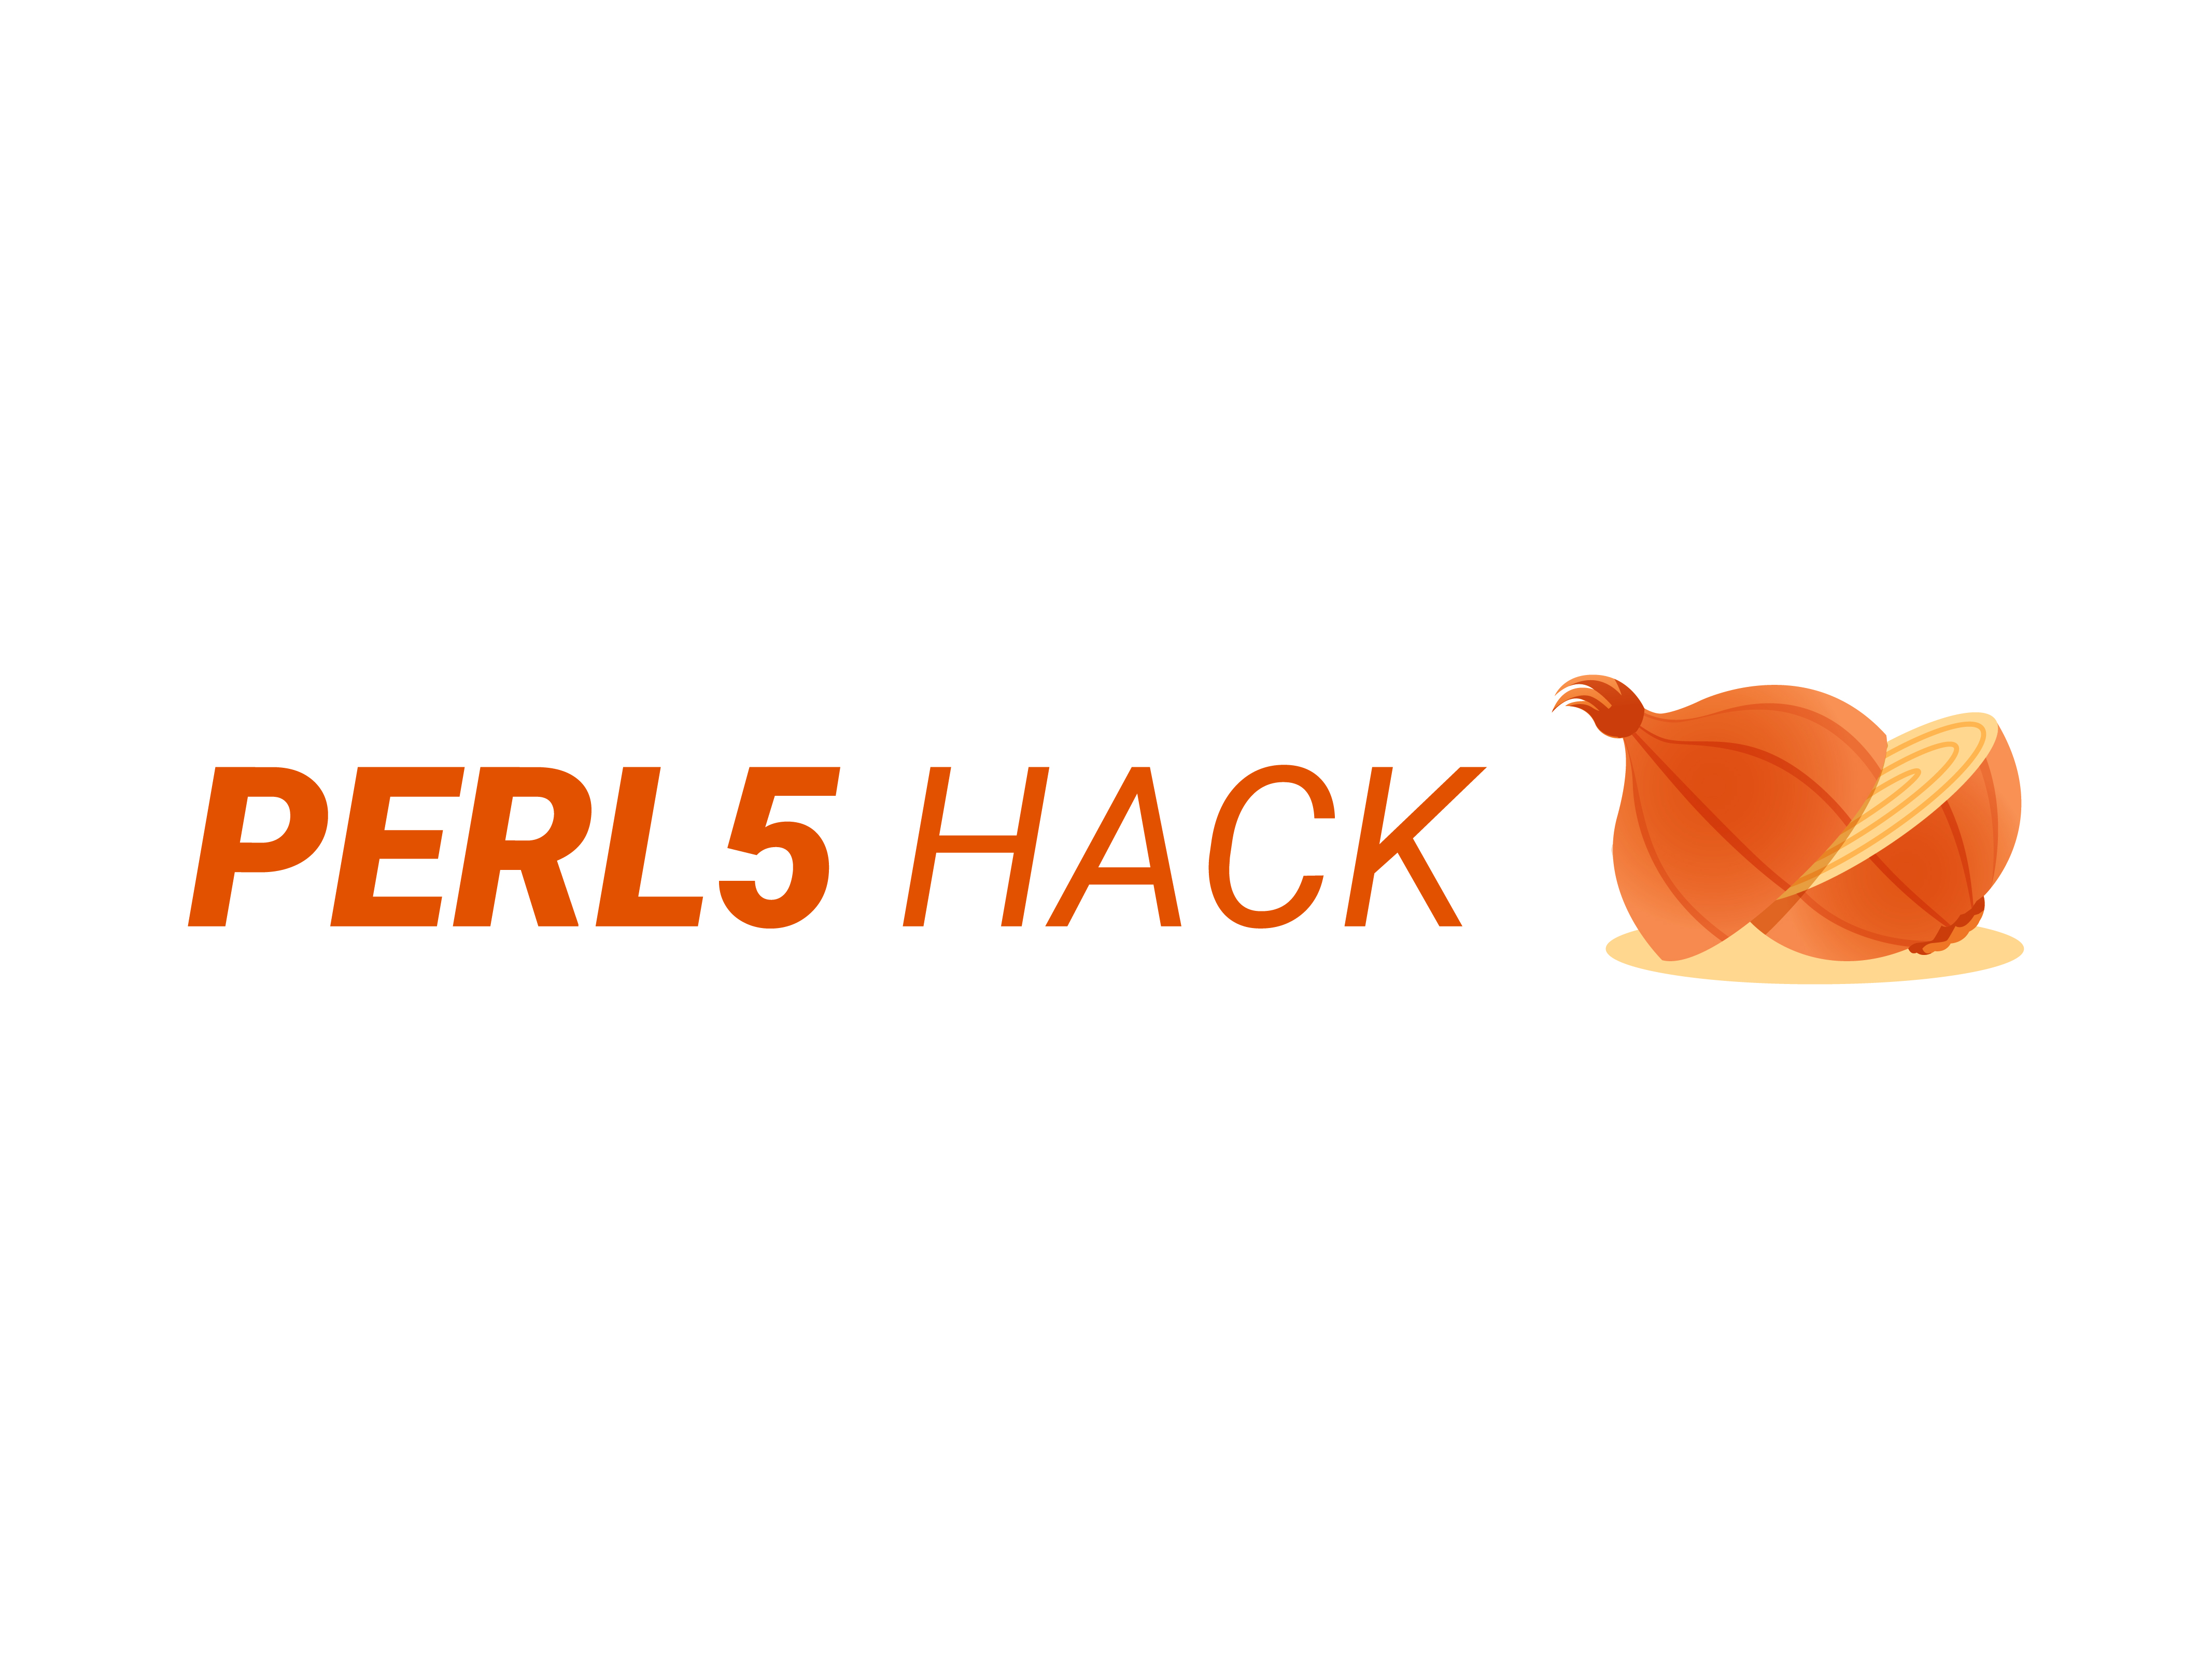 perl5-hack-logo-03.jpg